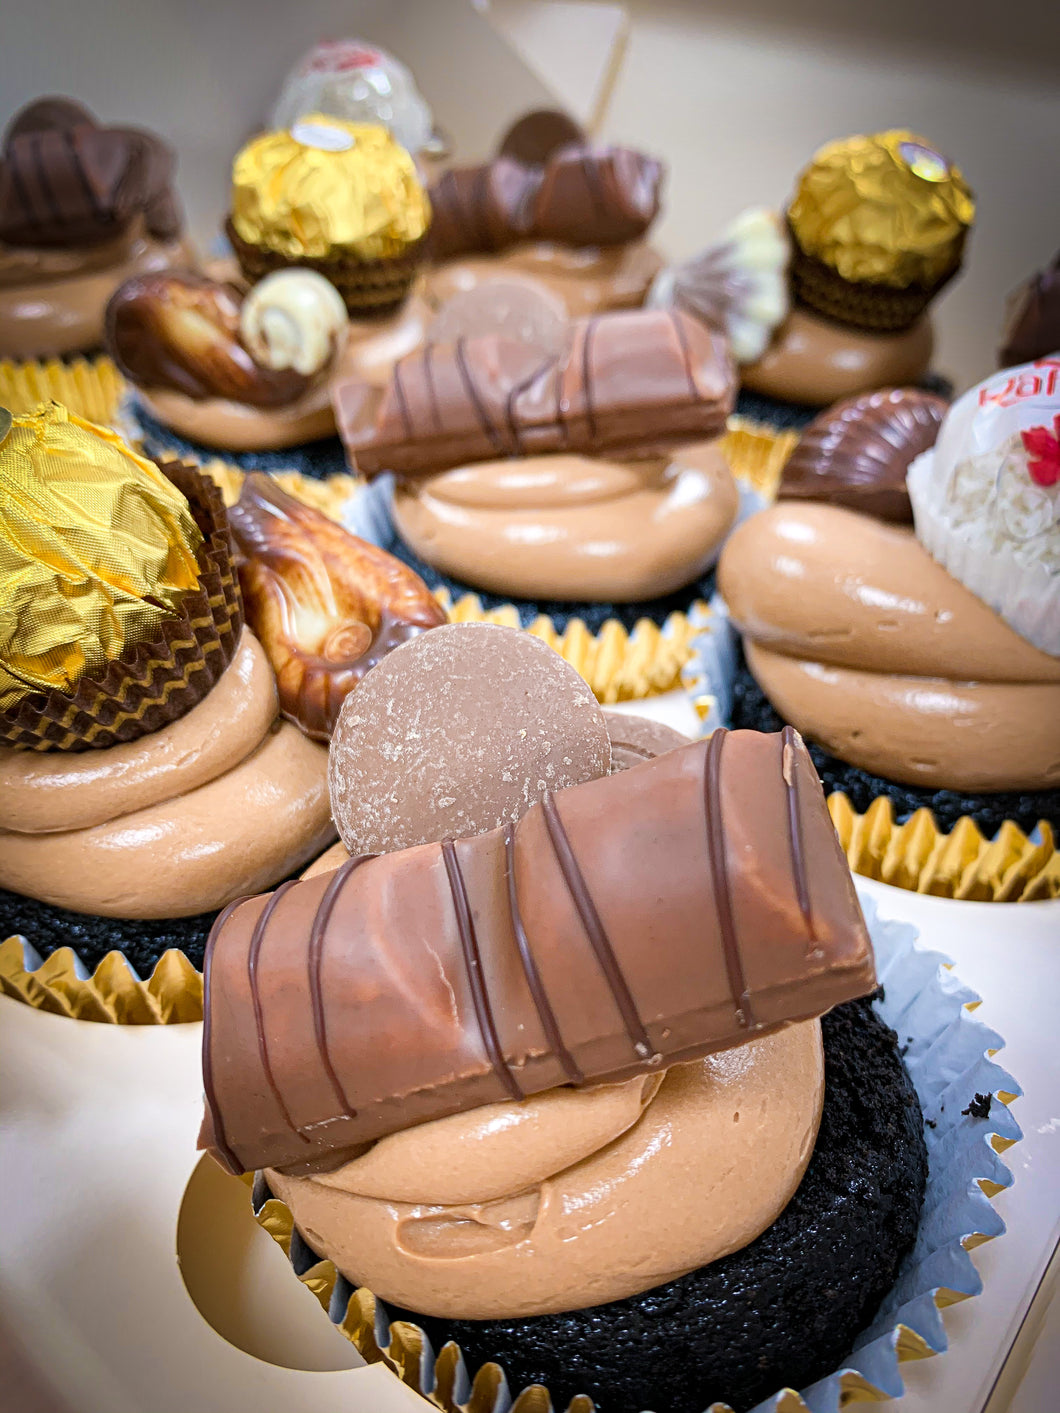 The Chocolate Box - Chocolate cupcakes